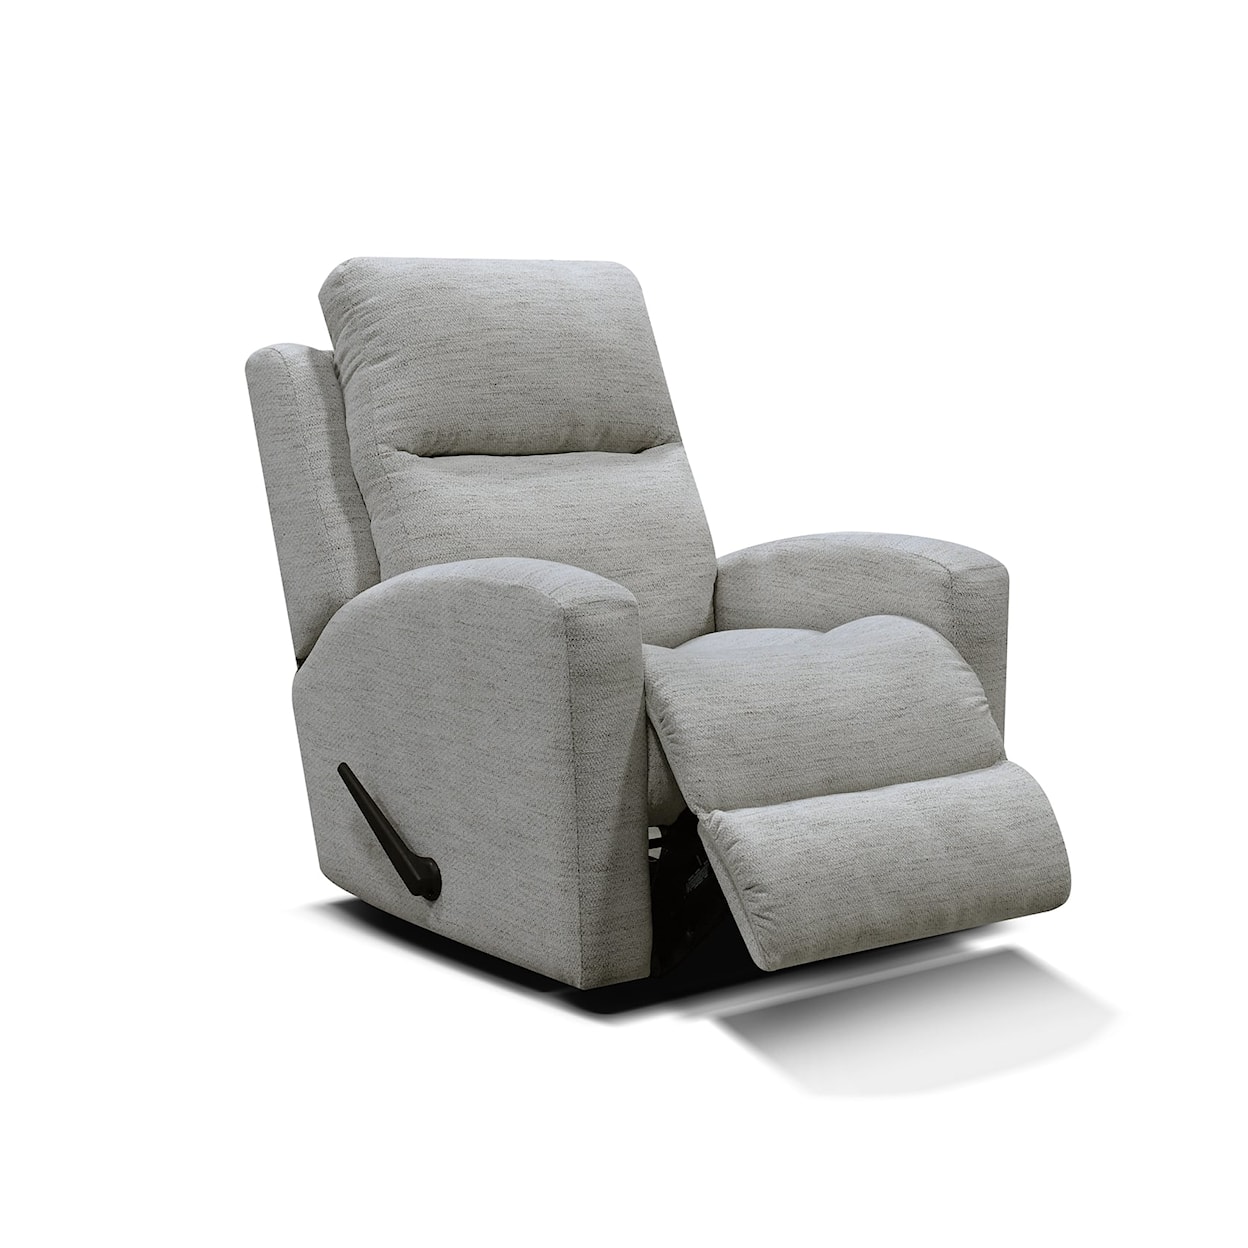 Tennessee Custom Upholstery EZ2600 Series Minimum Proximity Recliner